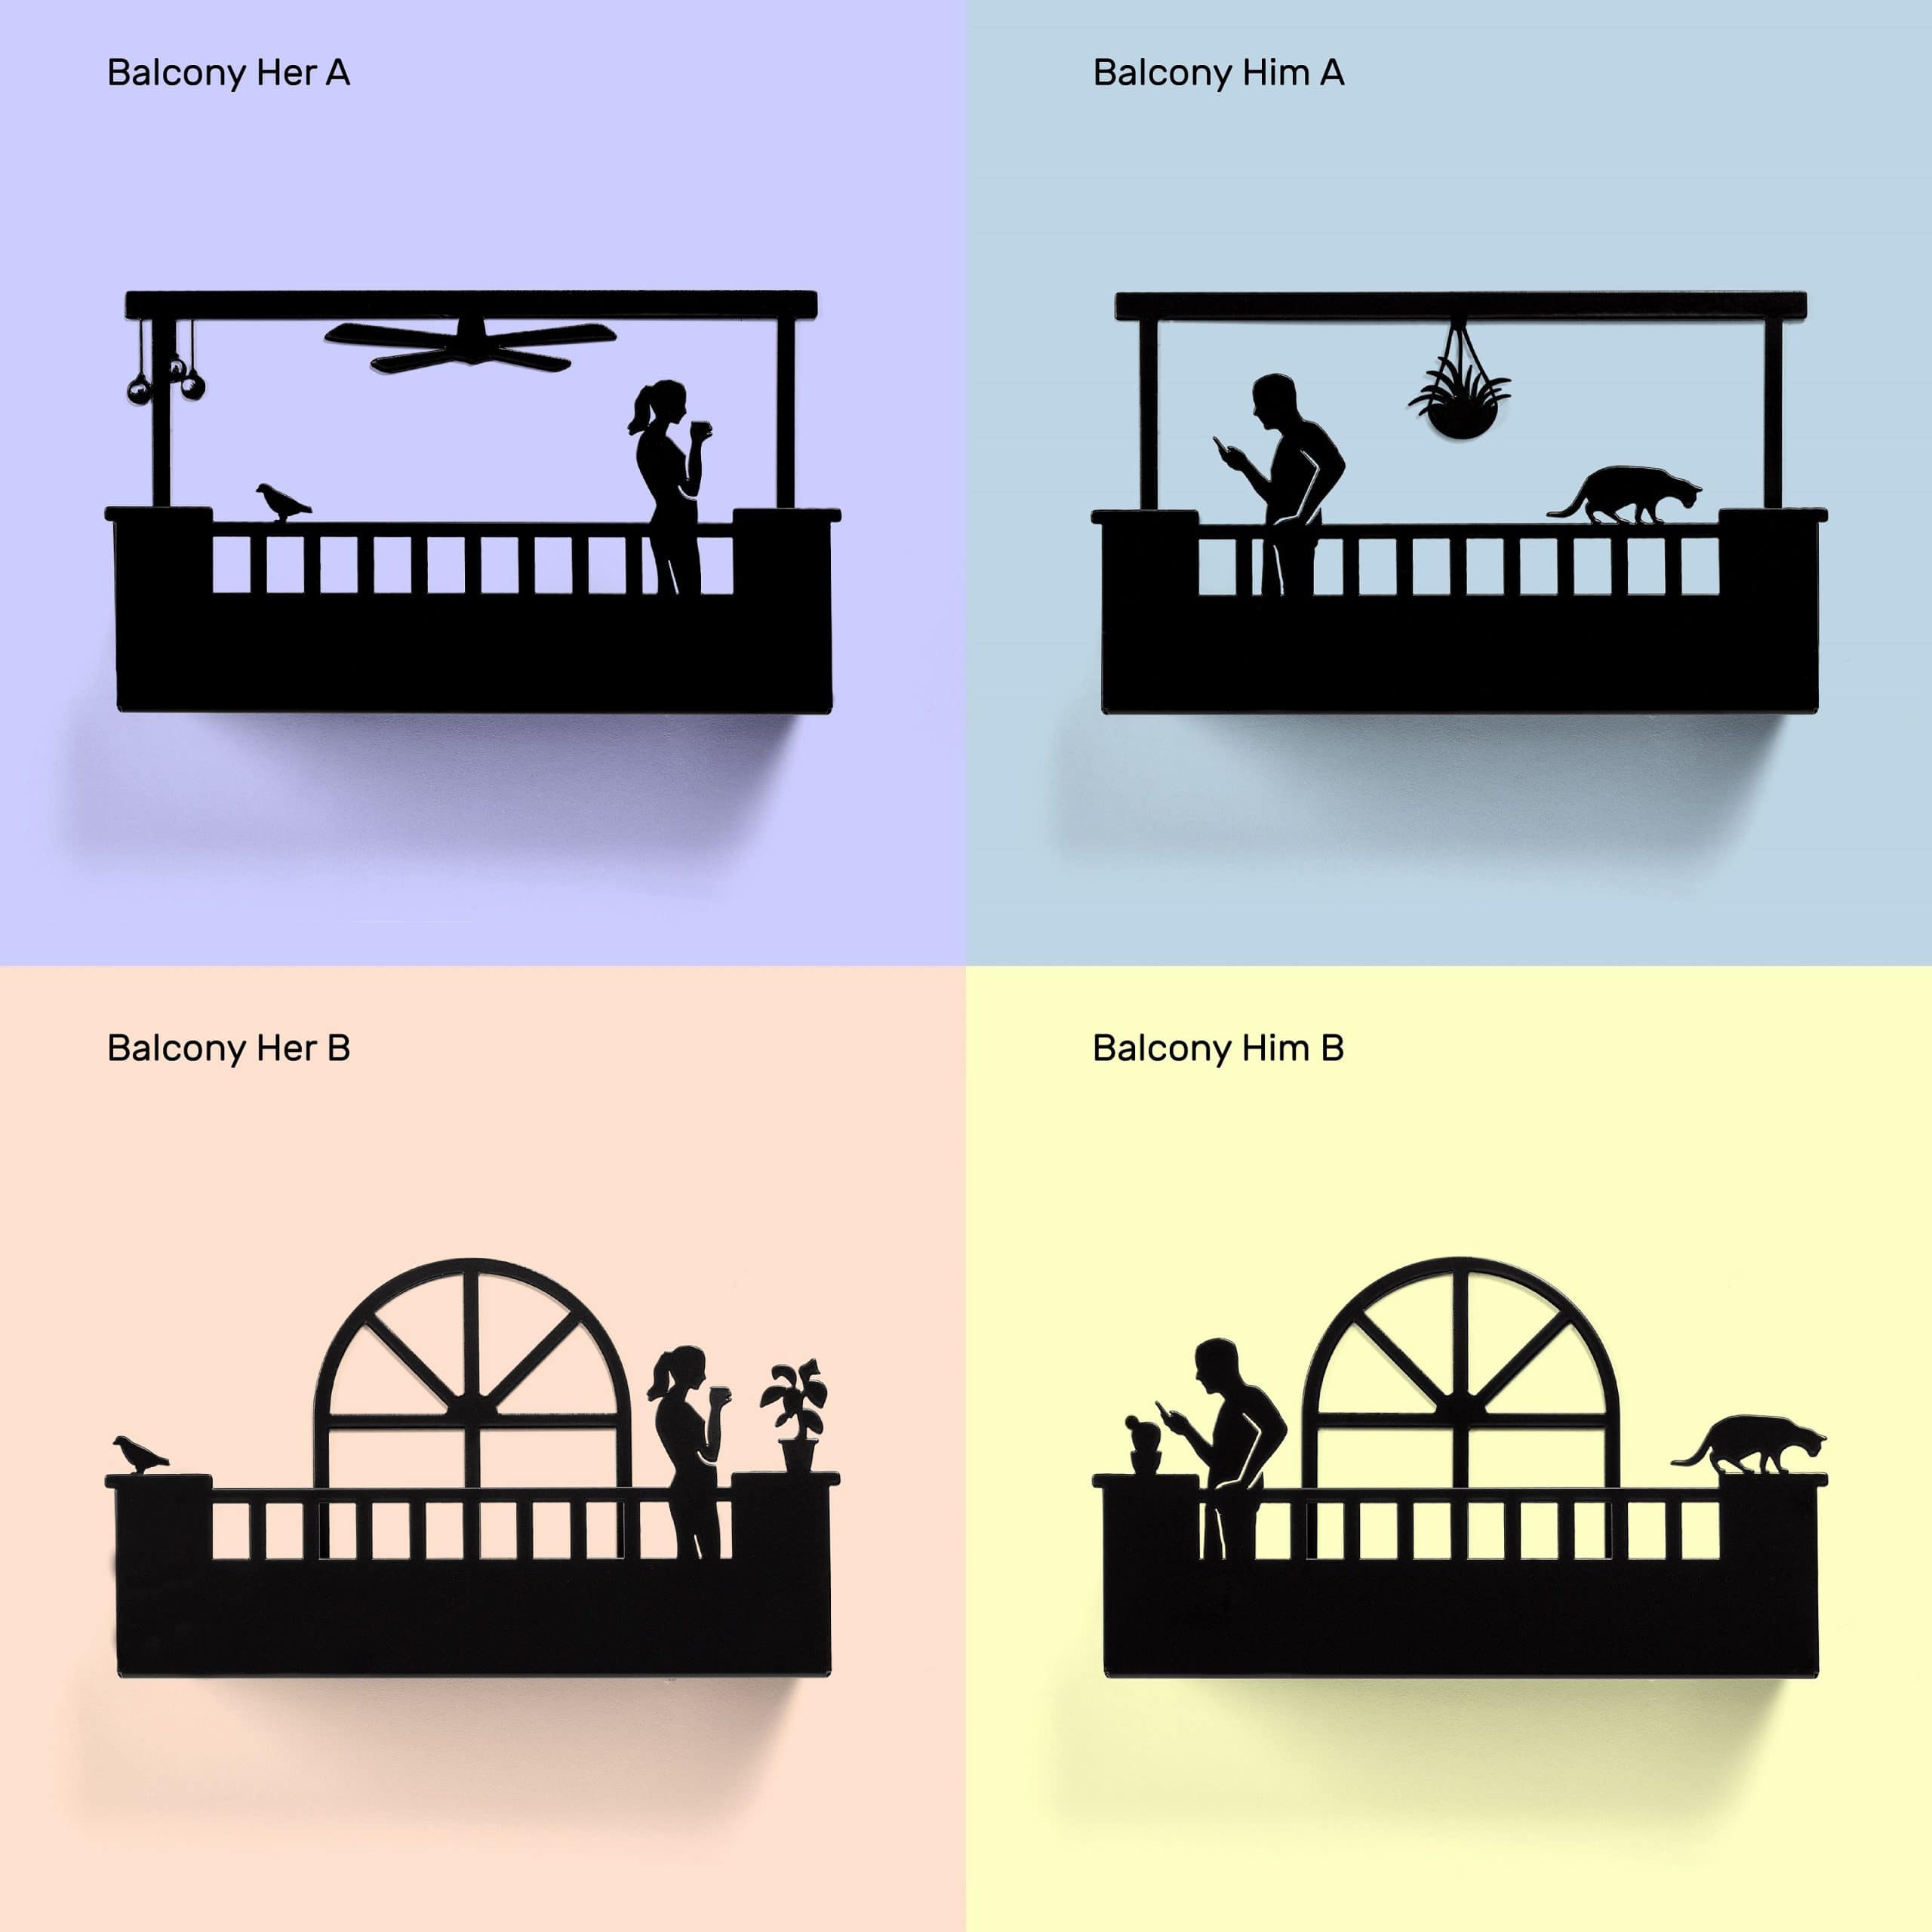 balcony-all-4-models-by-artoridesign